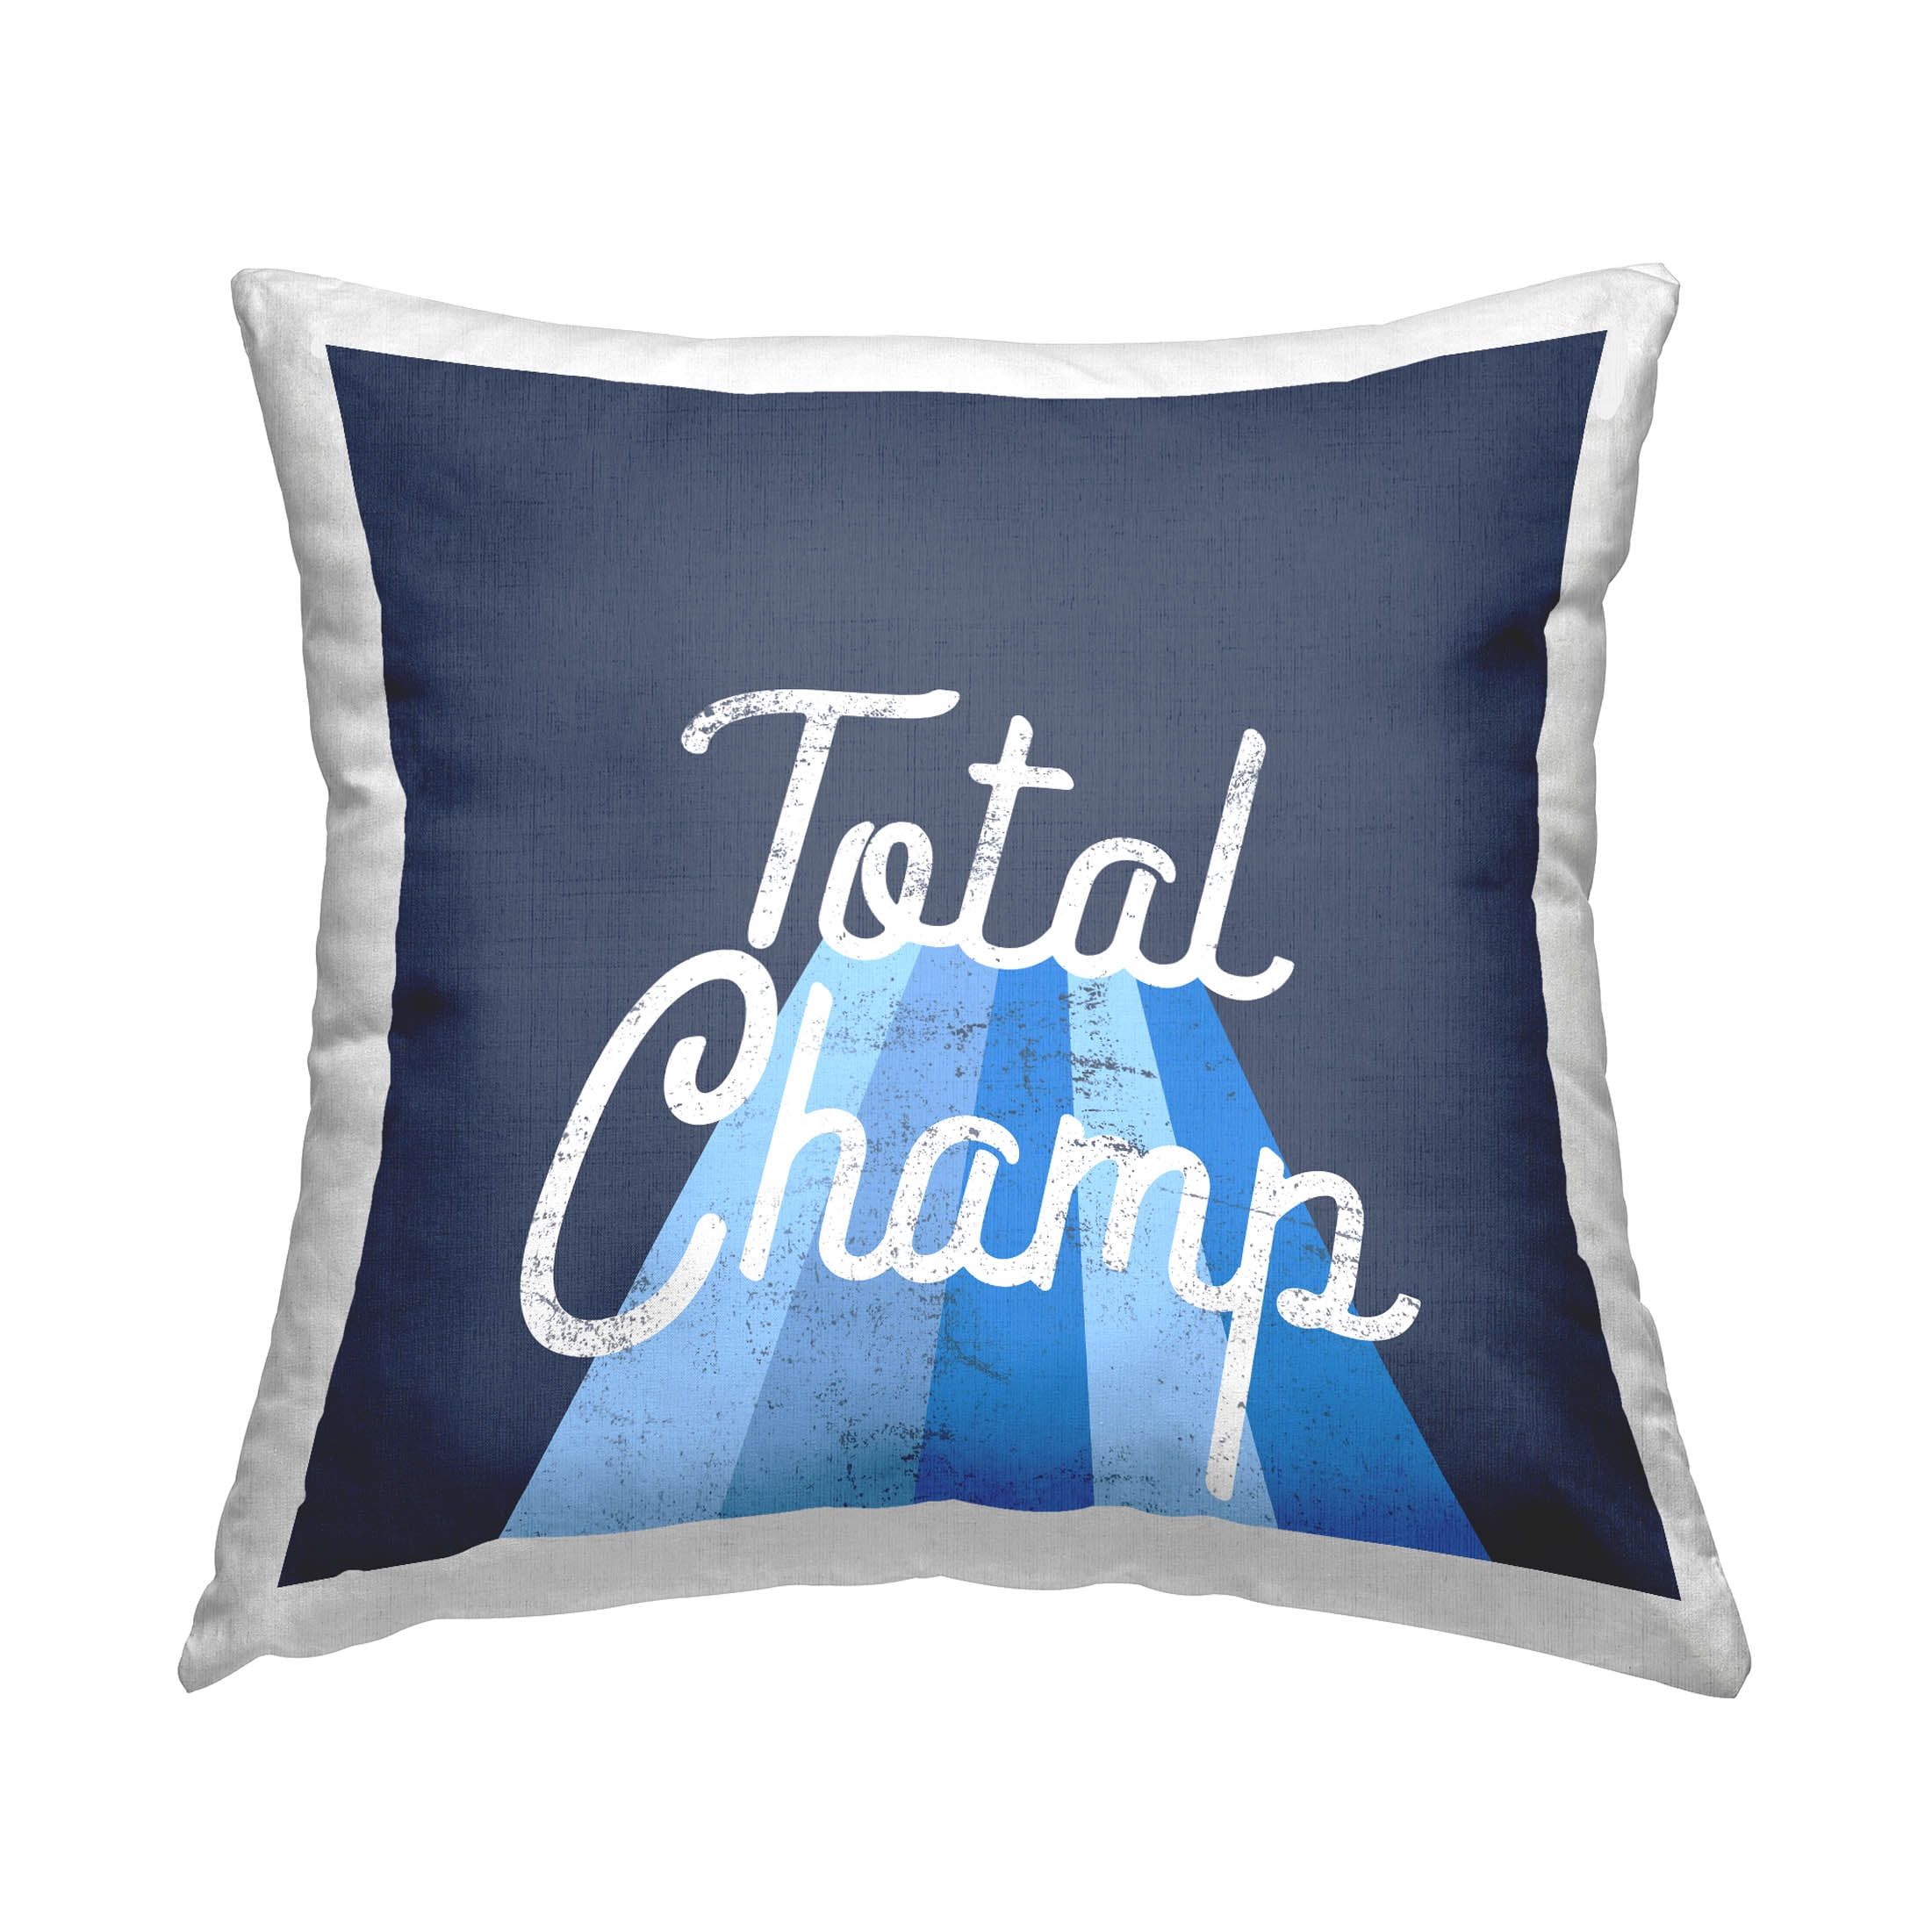 Stupell Industries Retro Total Champ Phrase Printed Throw Pillow Design by  Daphne Polselli 